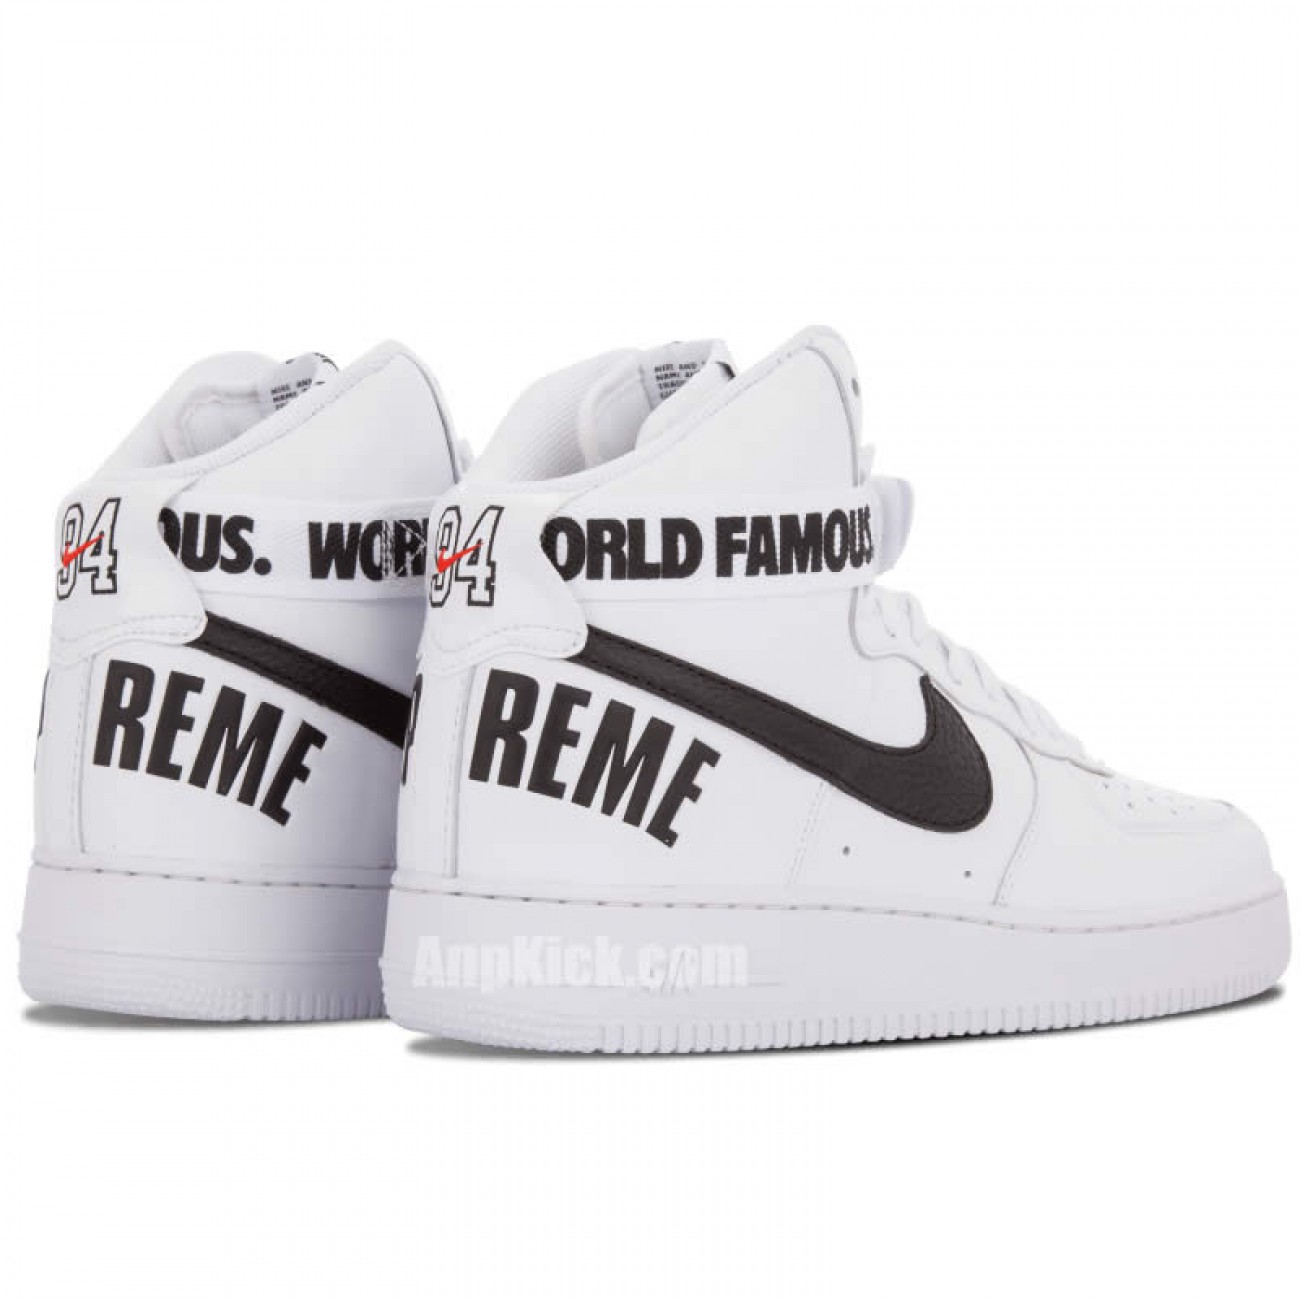 Supreme® x Nike Air Force 1 High SP World Famous 94 White/Black 698696-100